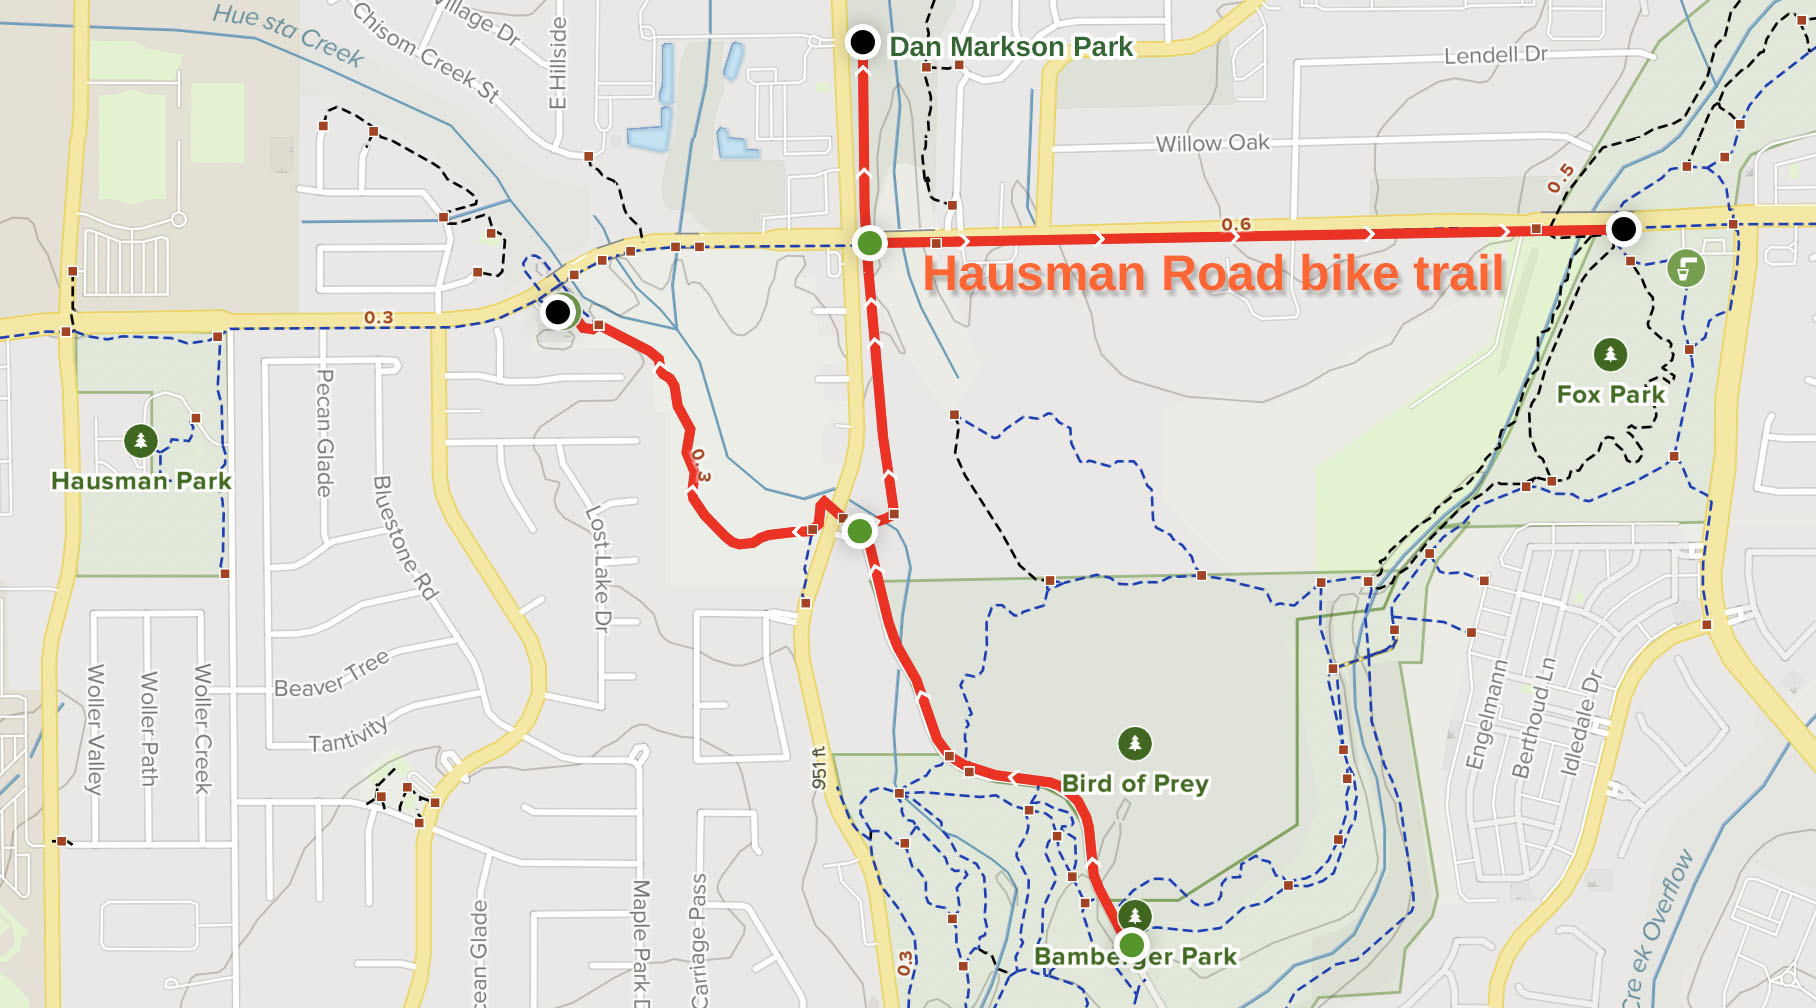 Hausman Road bike trail—Map: AllTrails.com, Graphics: SRR